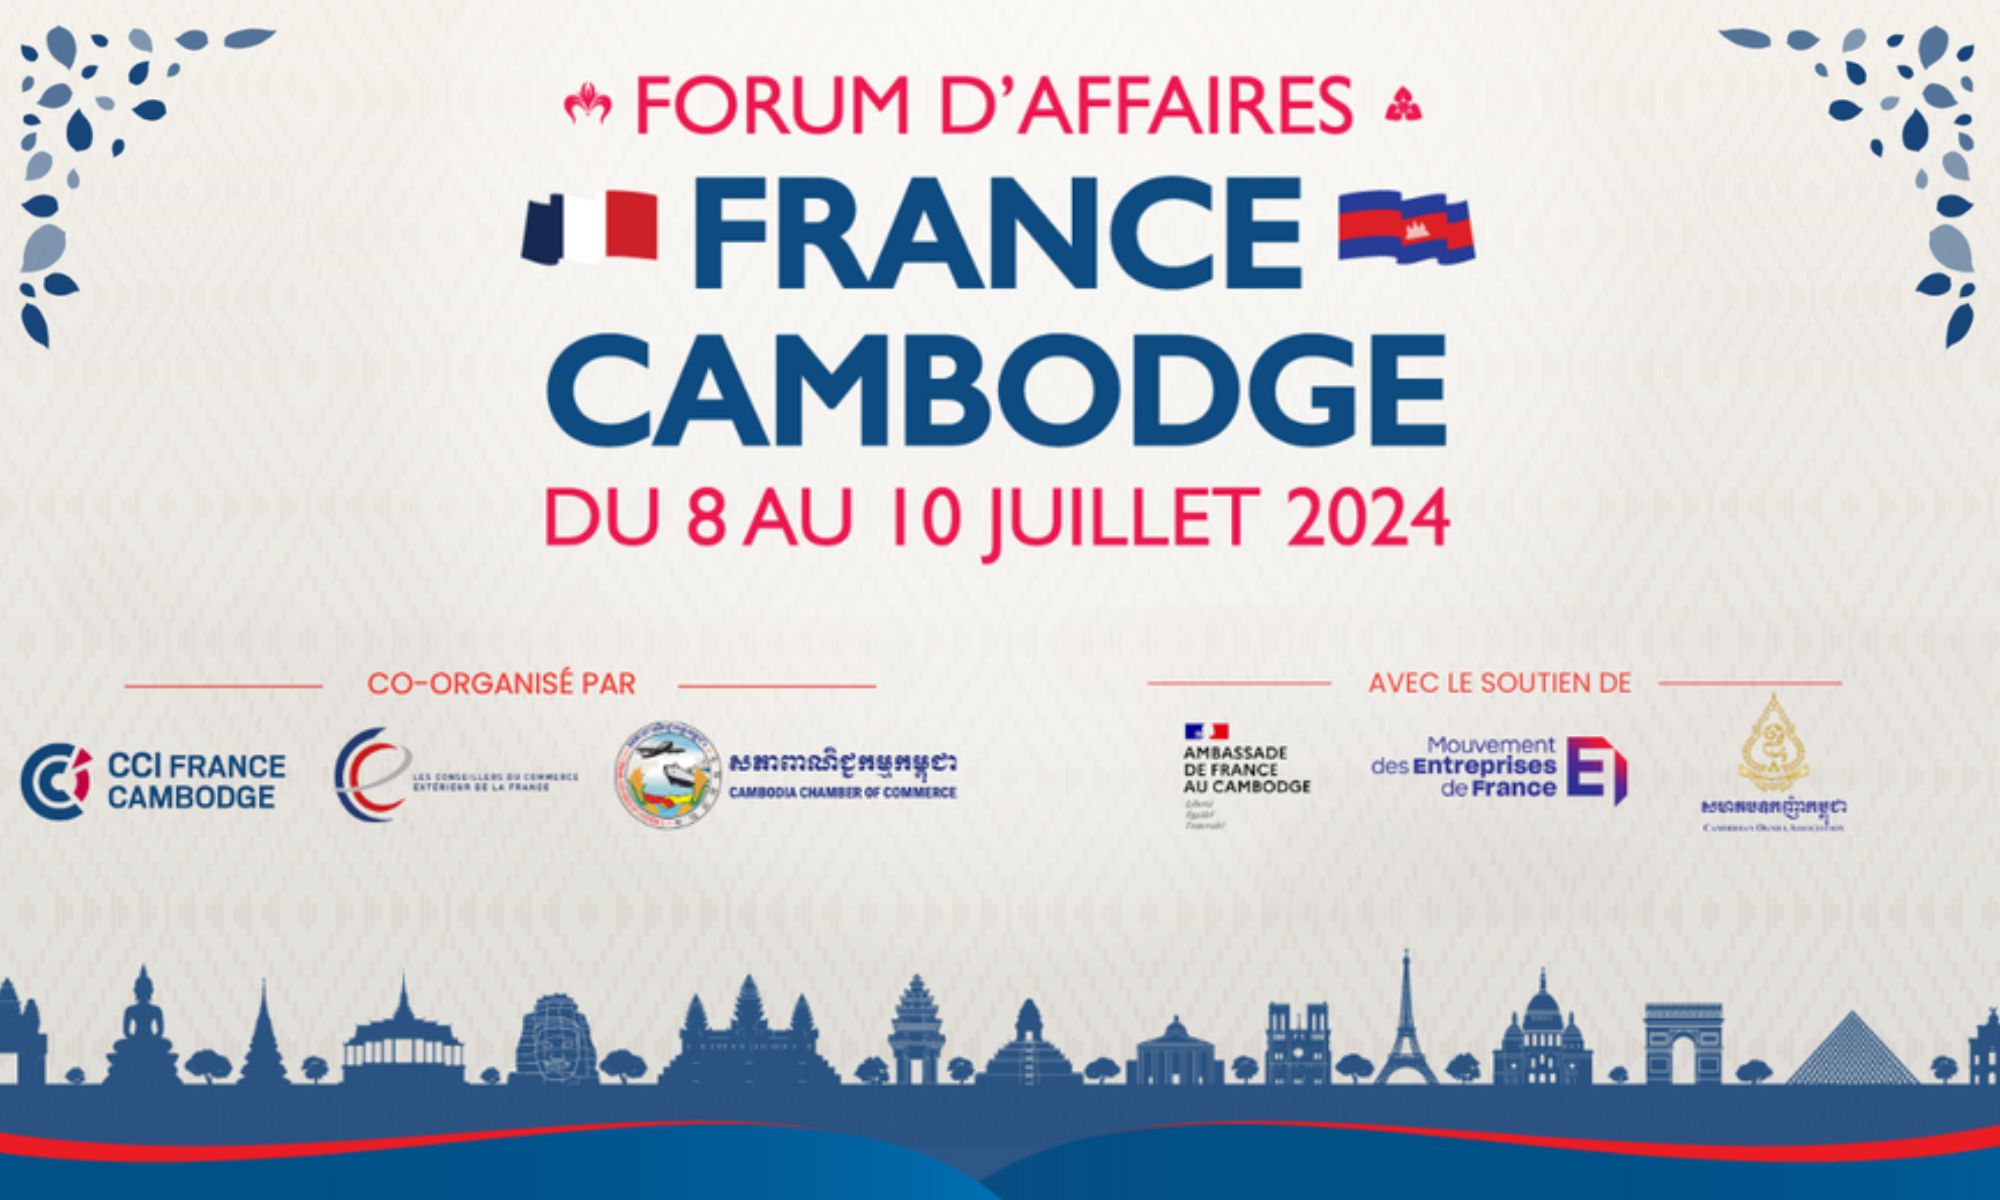 Forum d’affaires France-Cambodge 2024